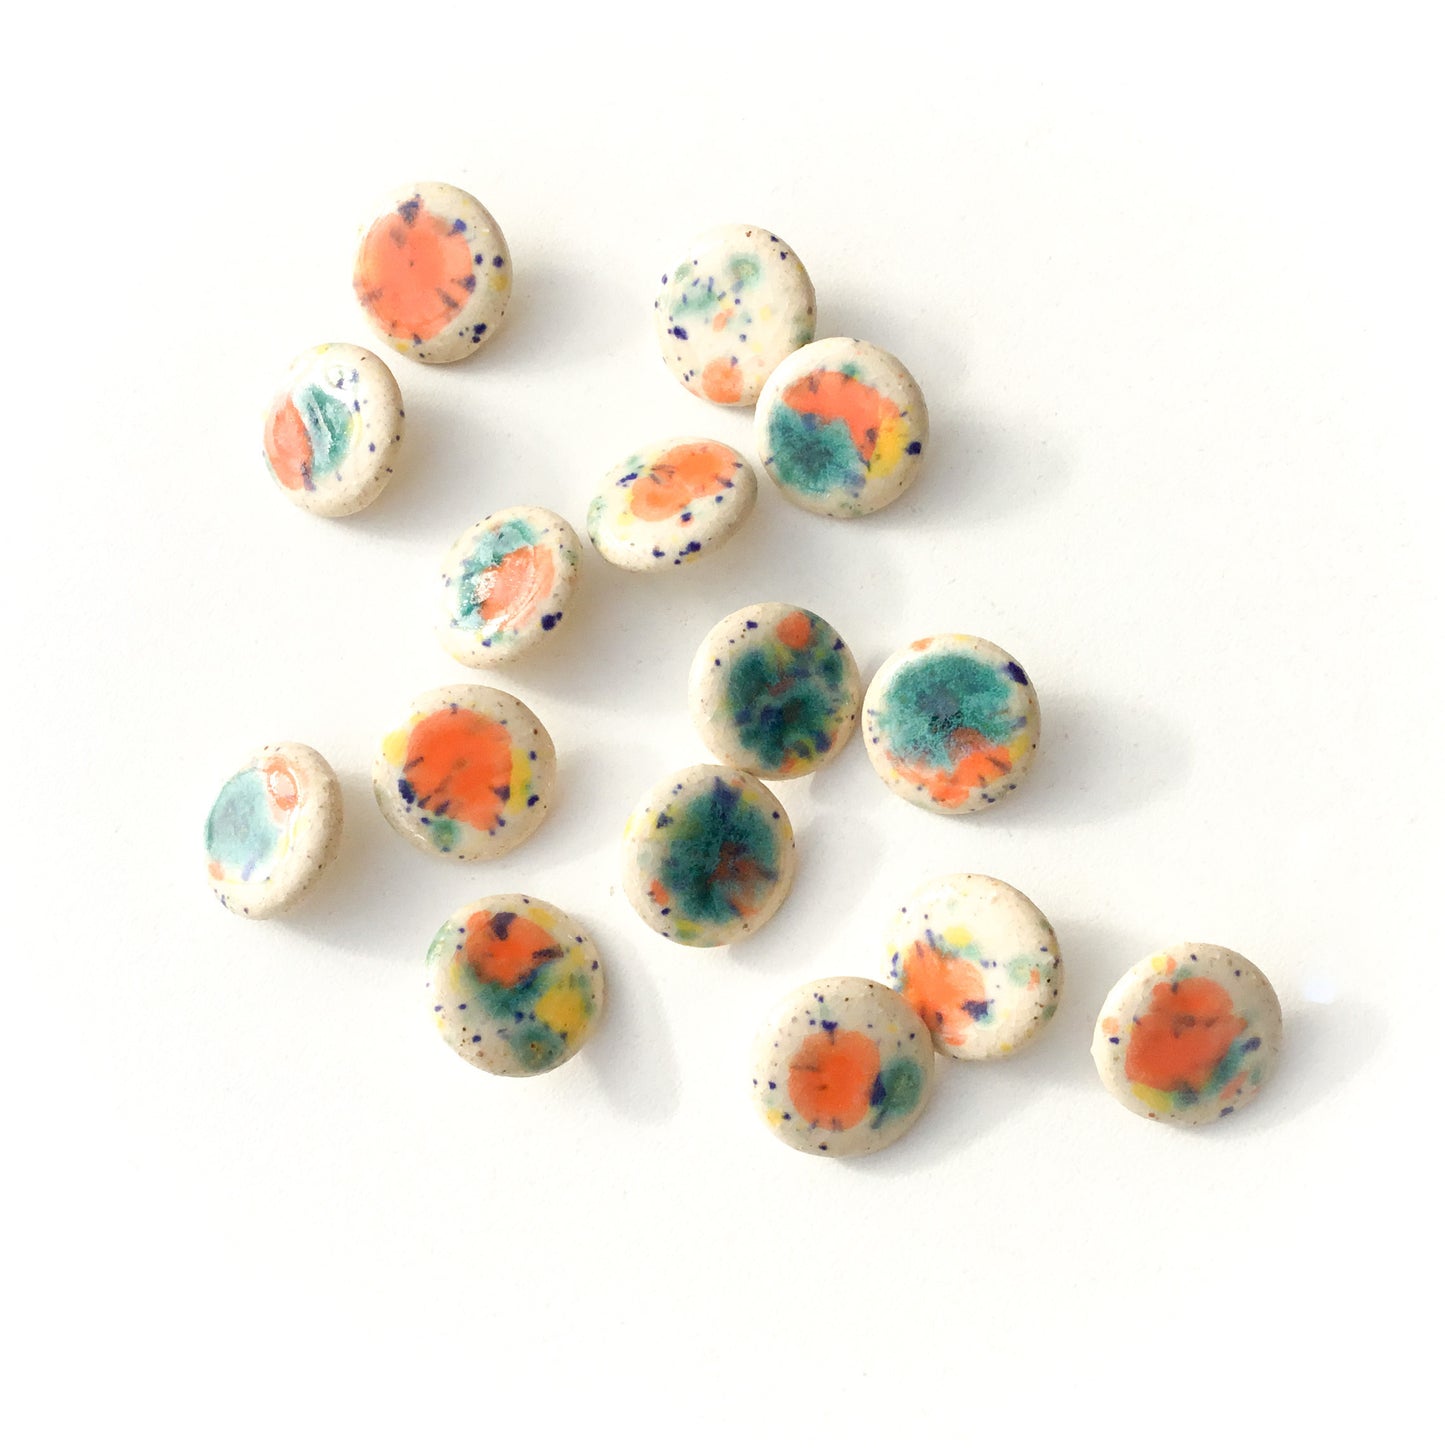 Vibrant Color Burst Ceramic Shank Buttons - 11/16"